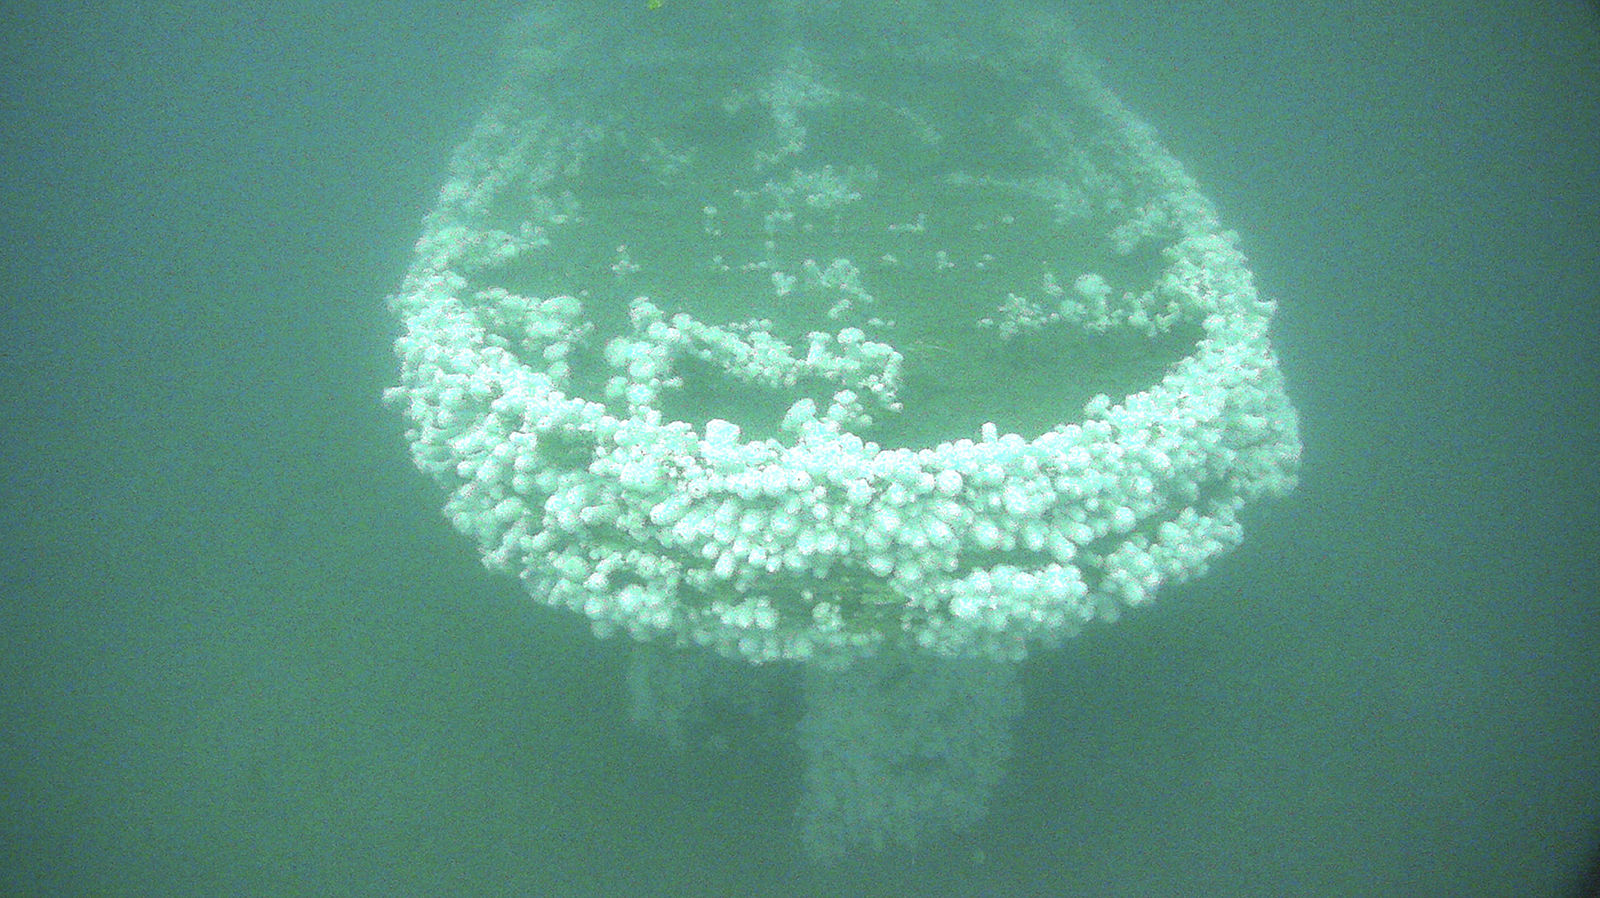 USS Conestoga wreck